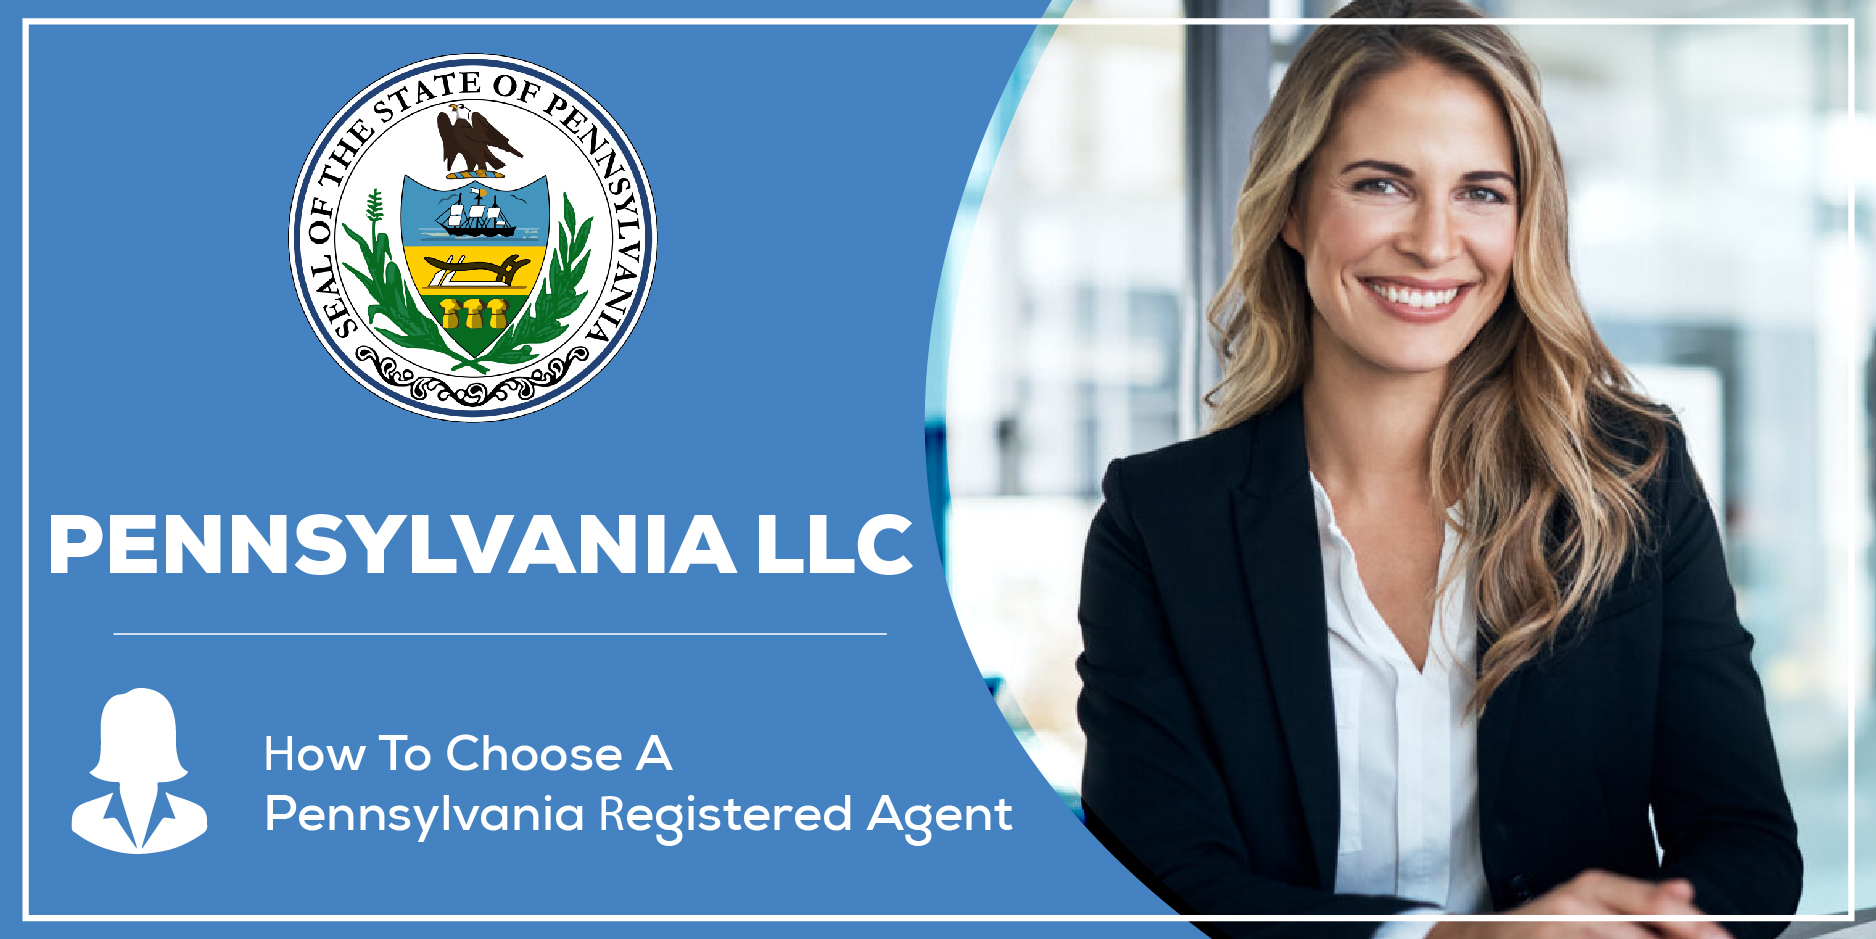 Pennsylvania Registered Agent